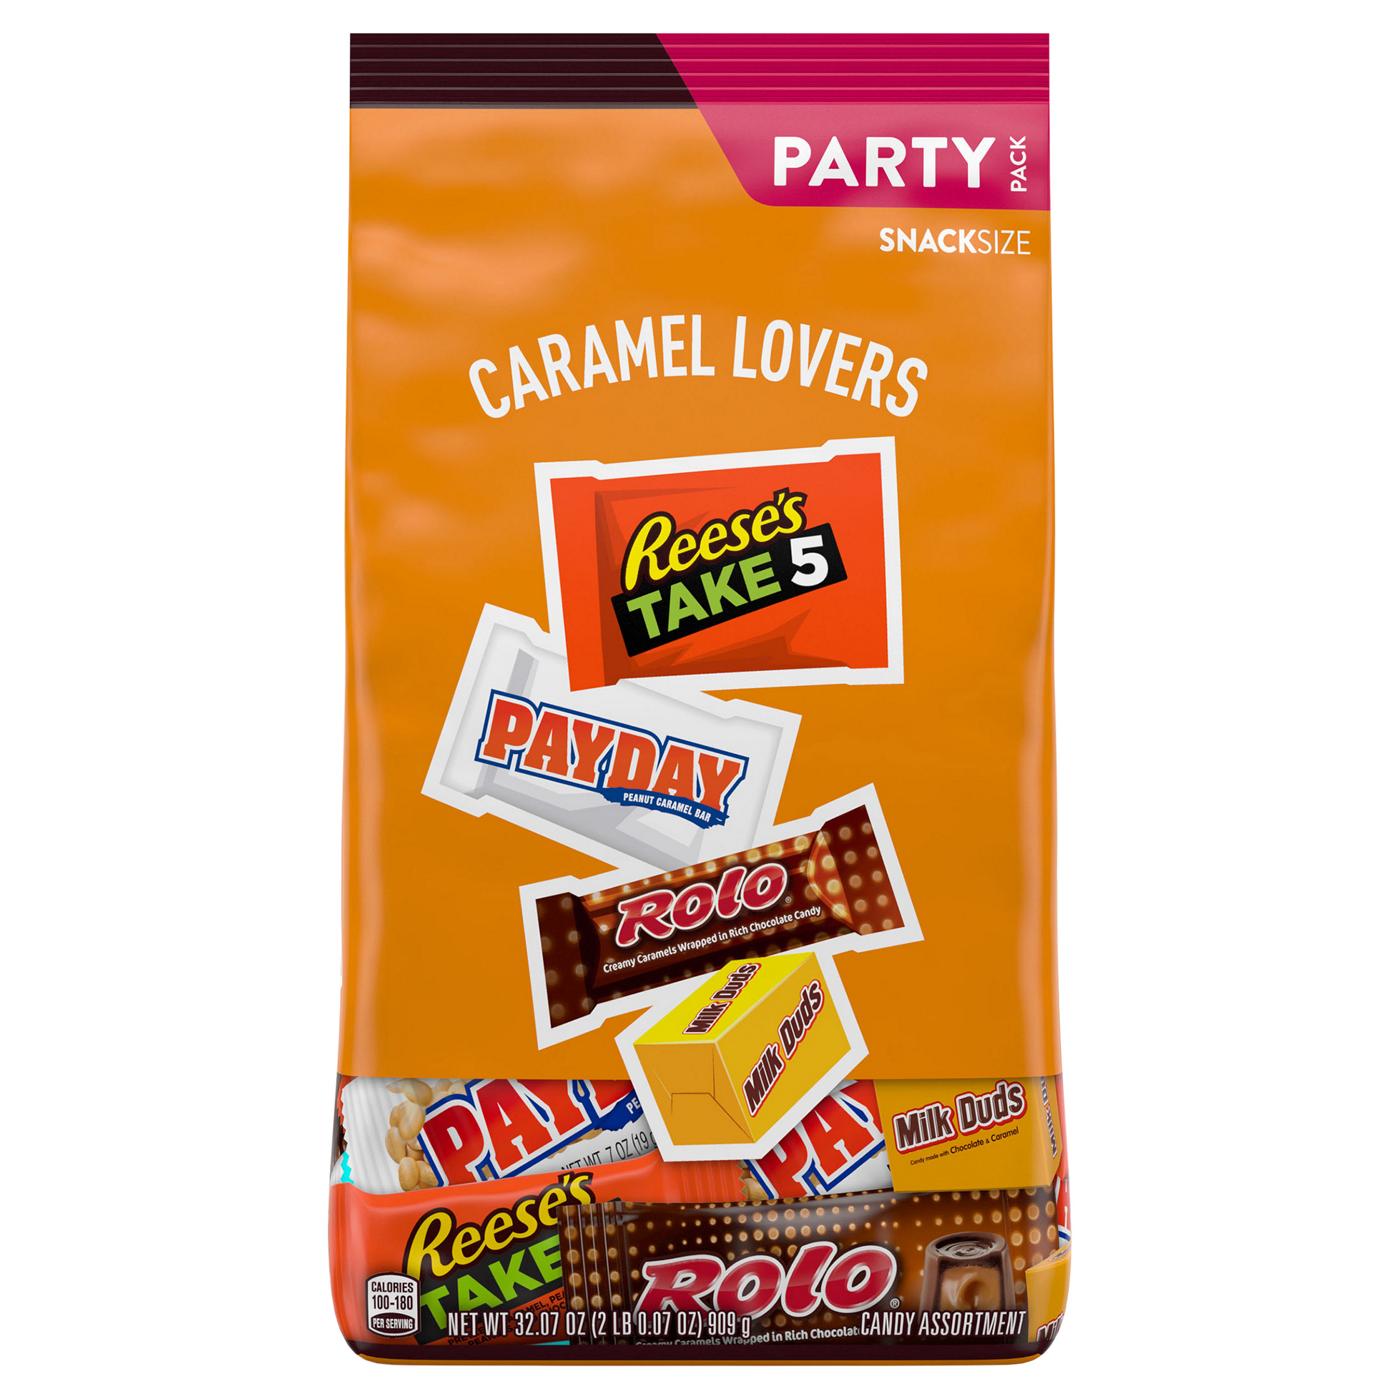 Caramel 75¢ Per Packet